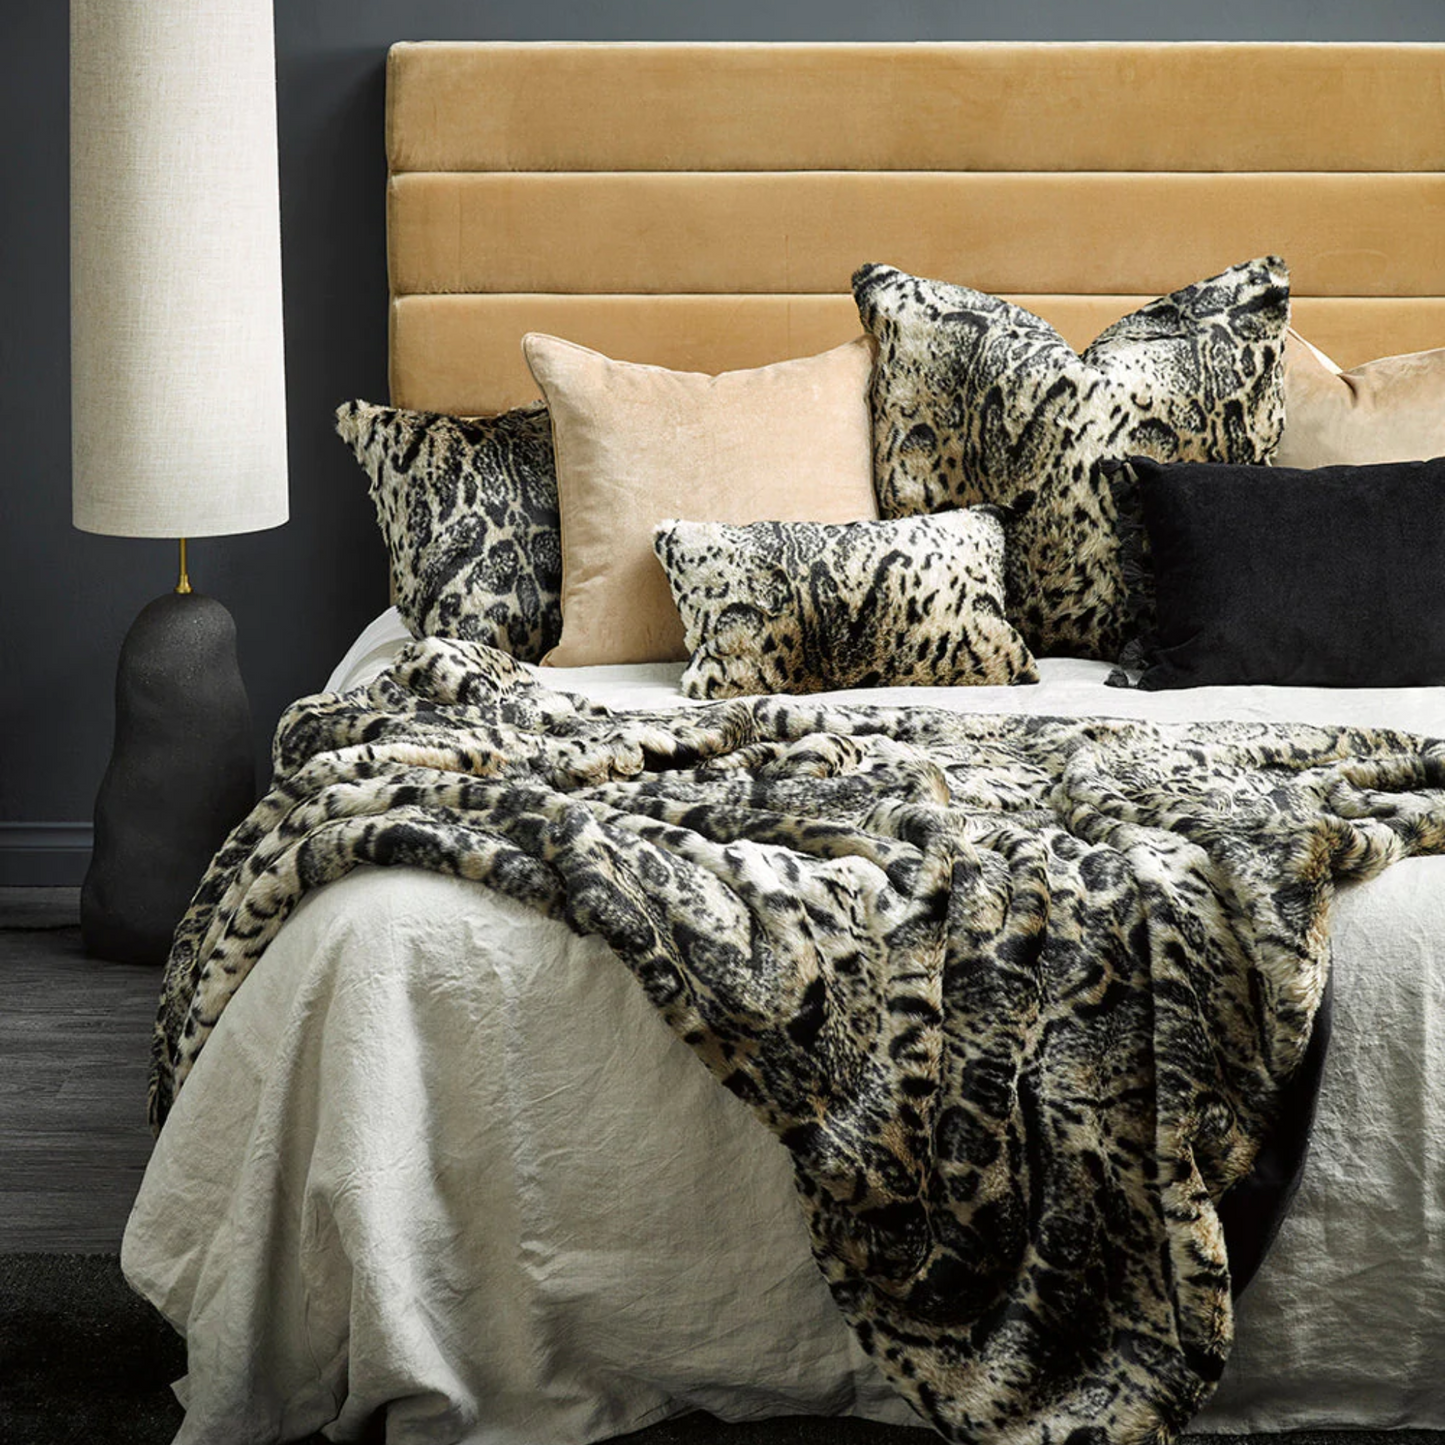 African Leopard Cushion